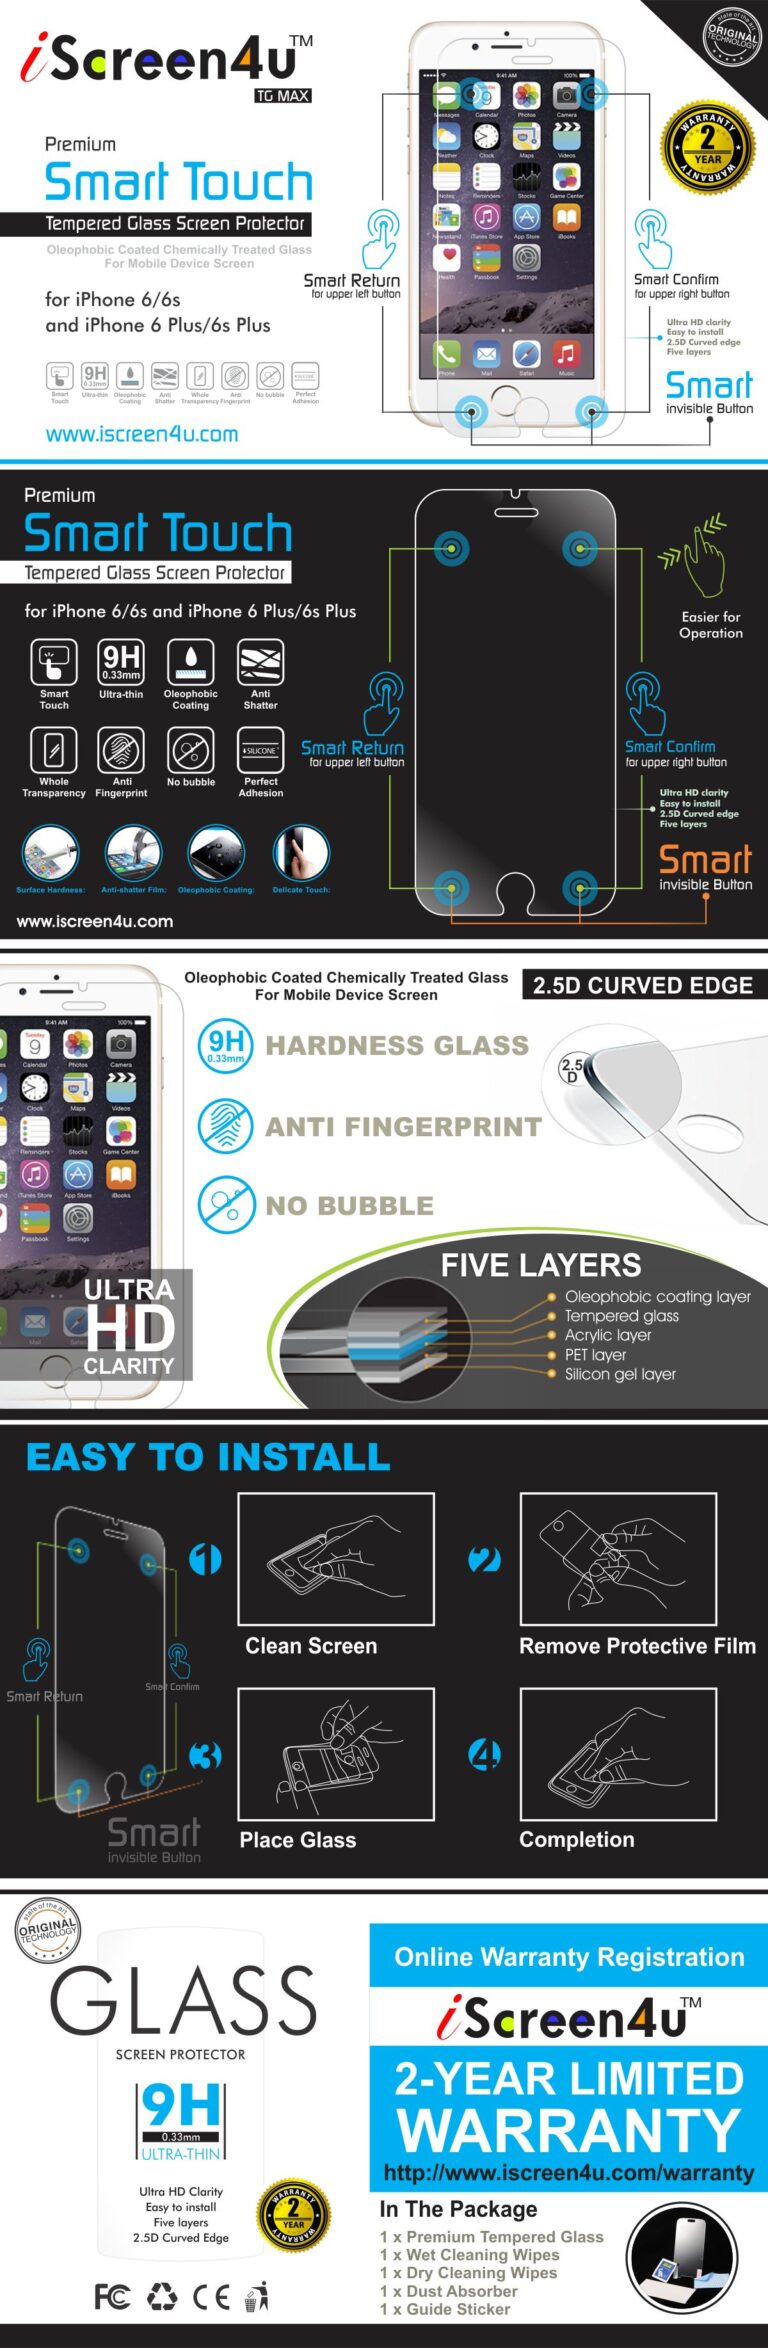 Portfolio: iScreen4u, Smart Touch, Glass, Brochure - Packaging Design - branding - Graphic Design - Print Design - Stationary Design - Brochure Design